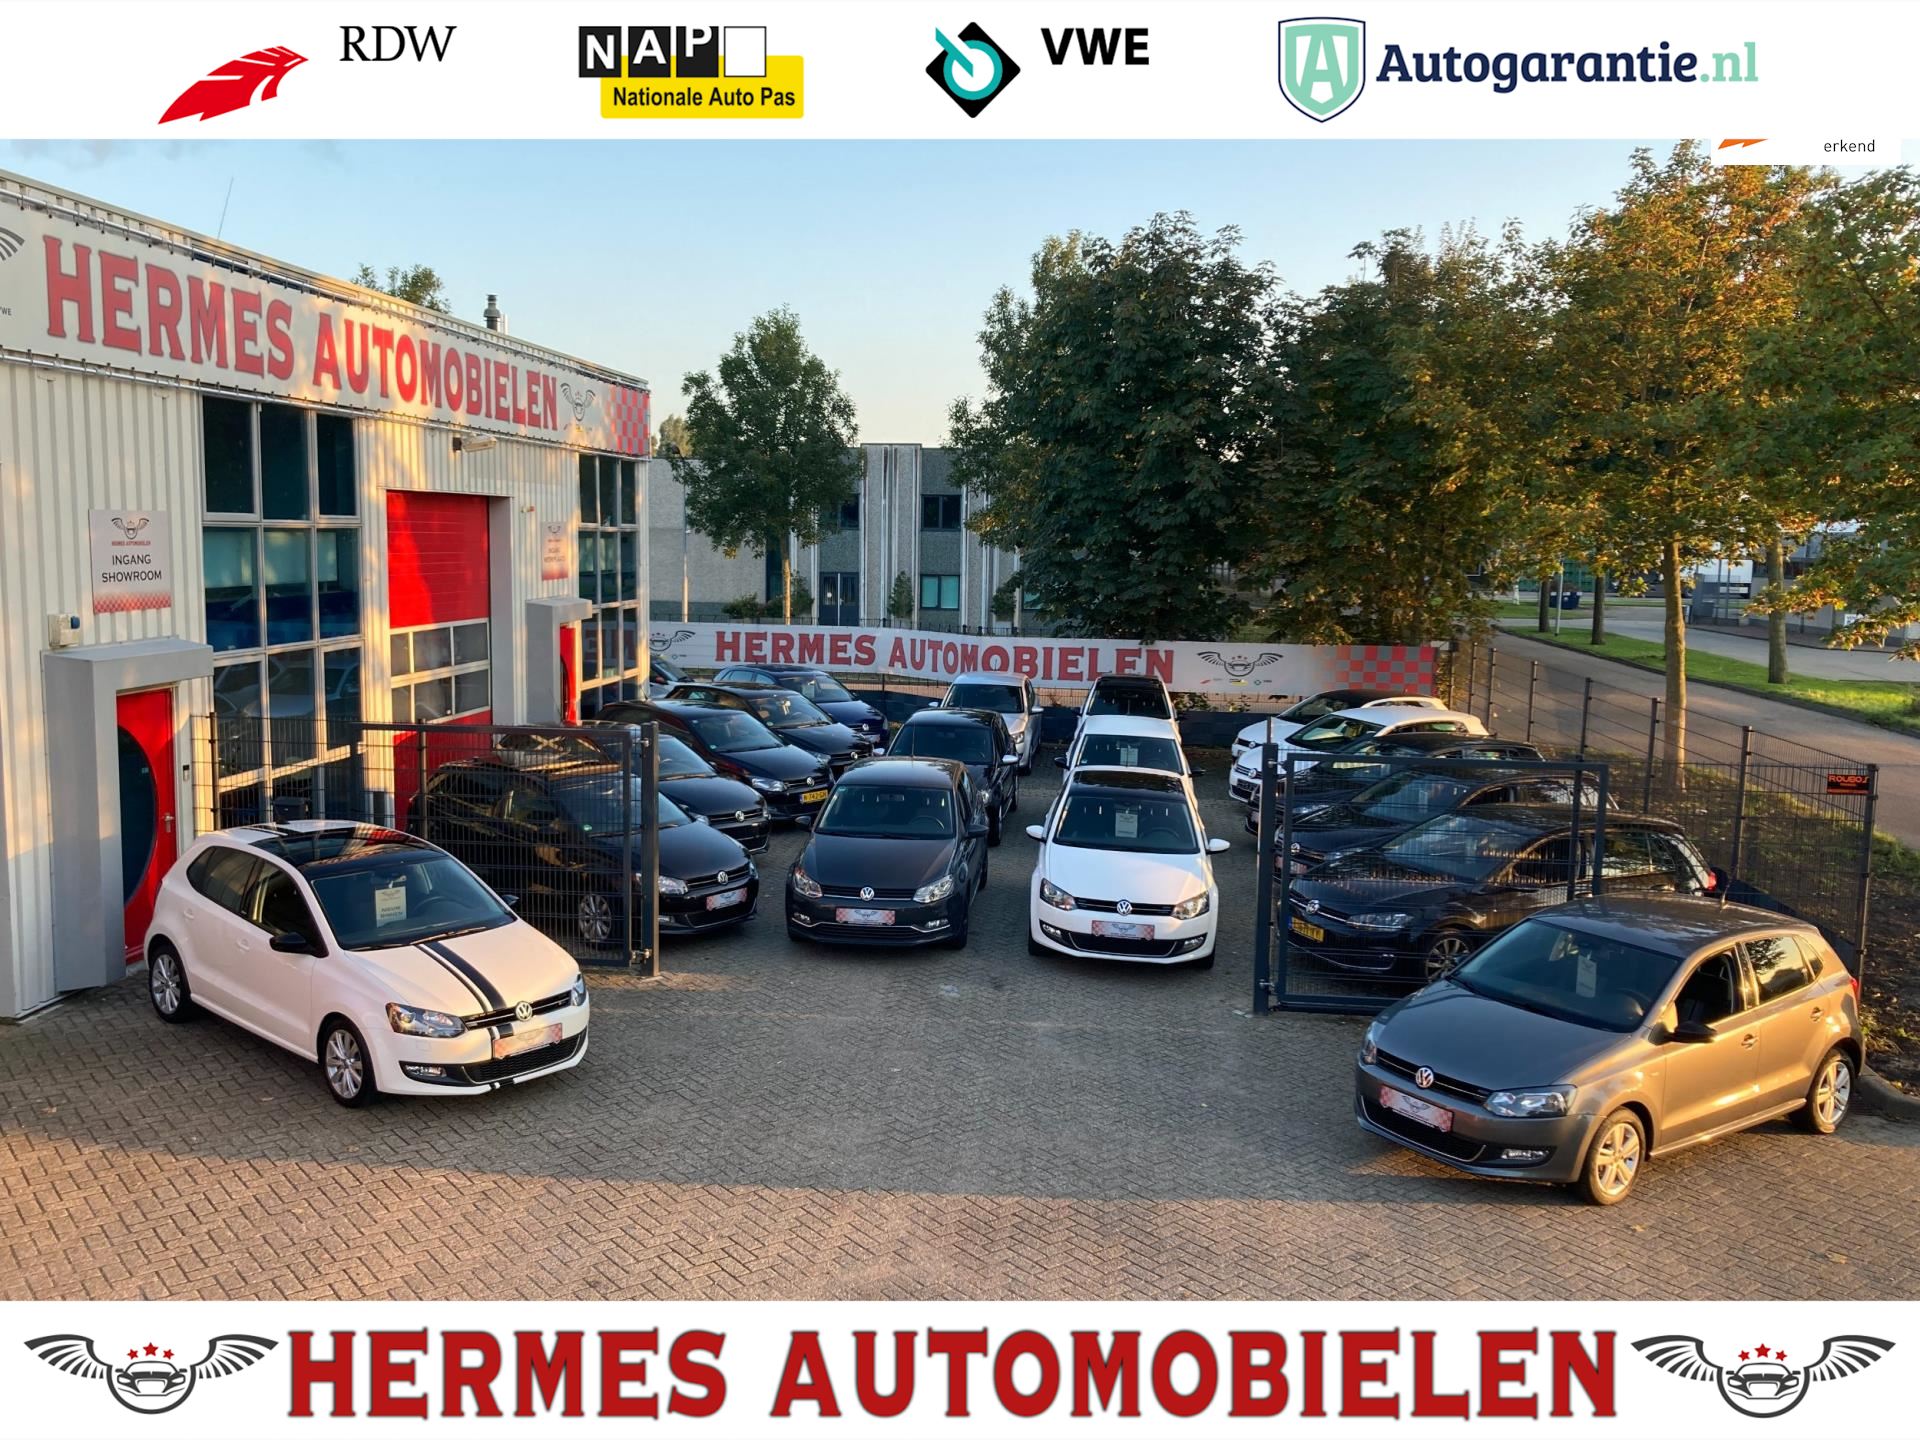 Volkswagen Polo occasion - Hermes Automobielen